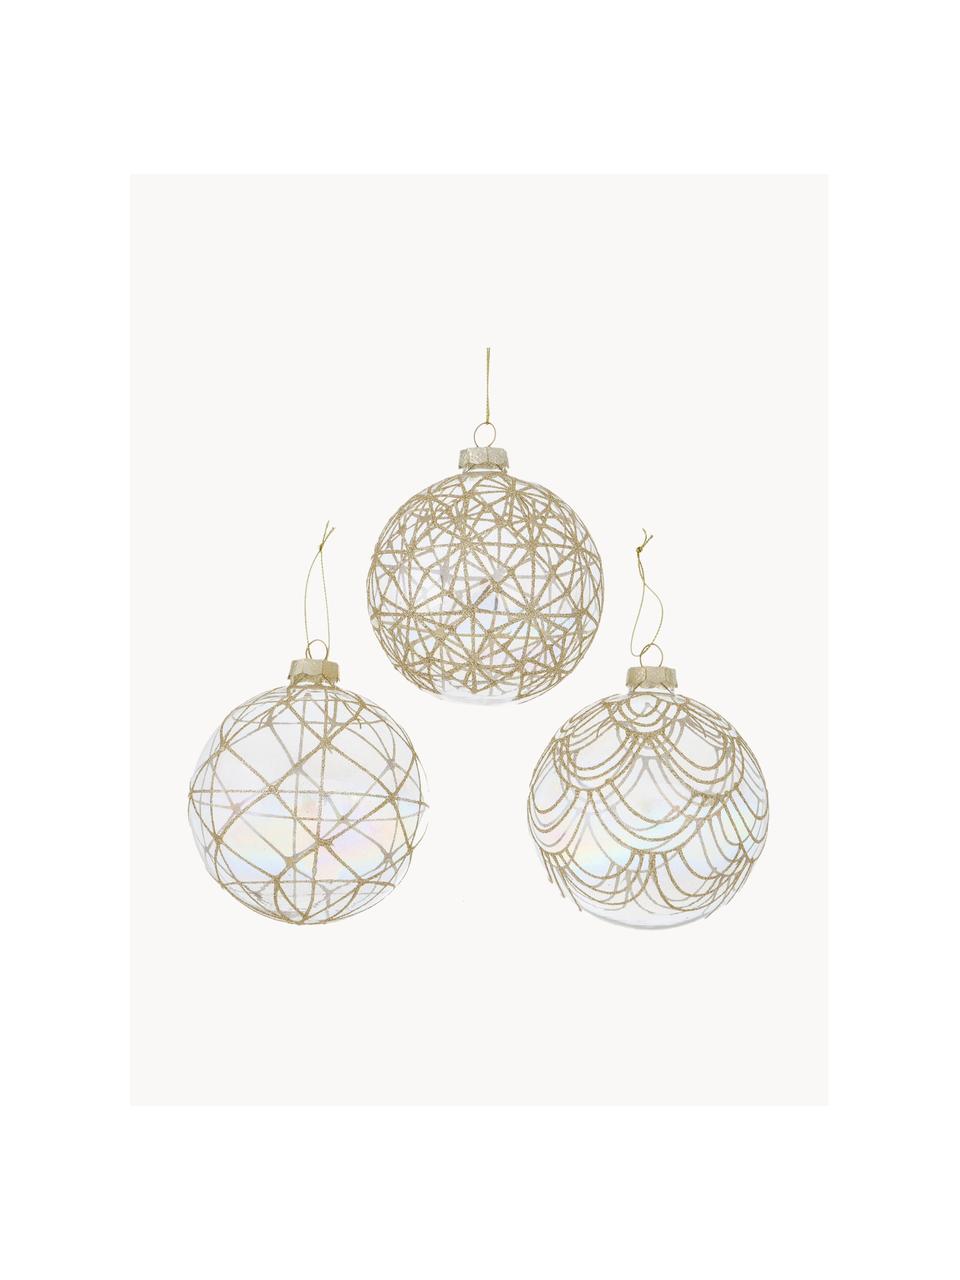 Kerstballen Galant, set van 12, Gelakt glas, Transparant, goudkleurig, Ø 10 x H 10 cm